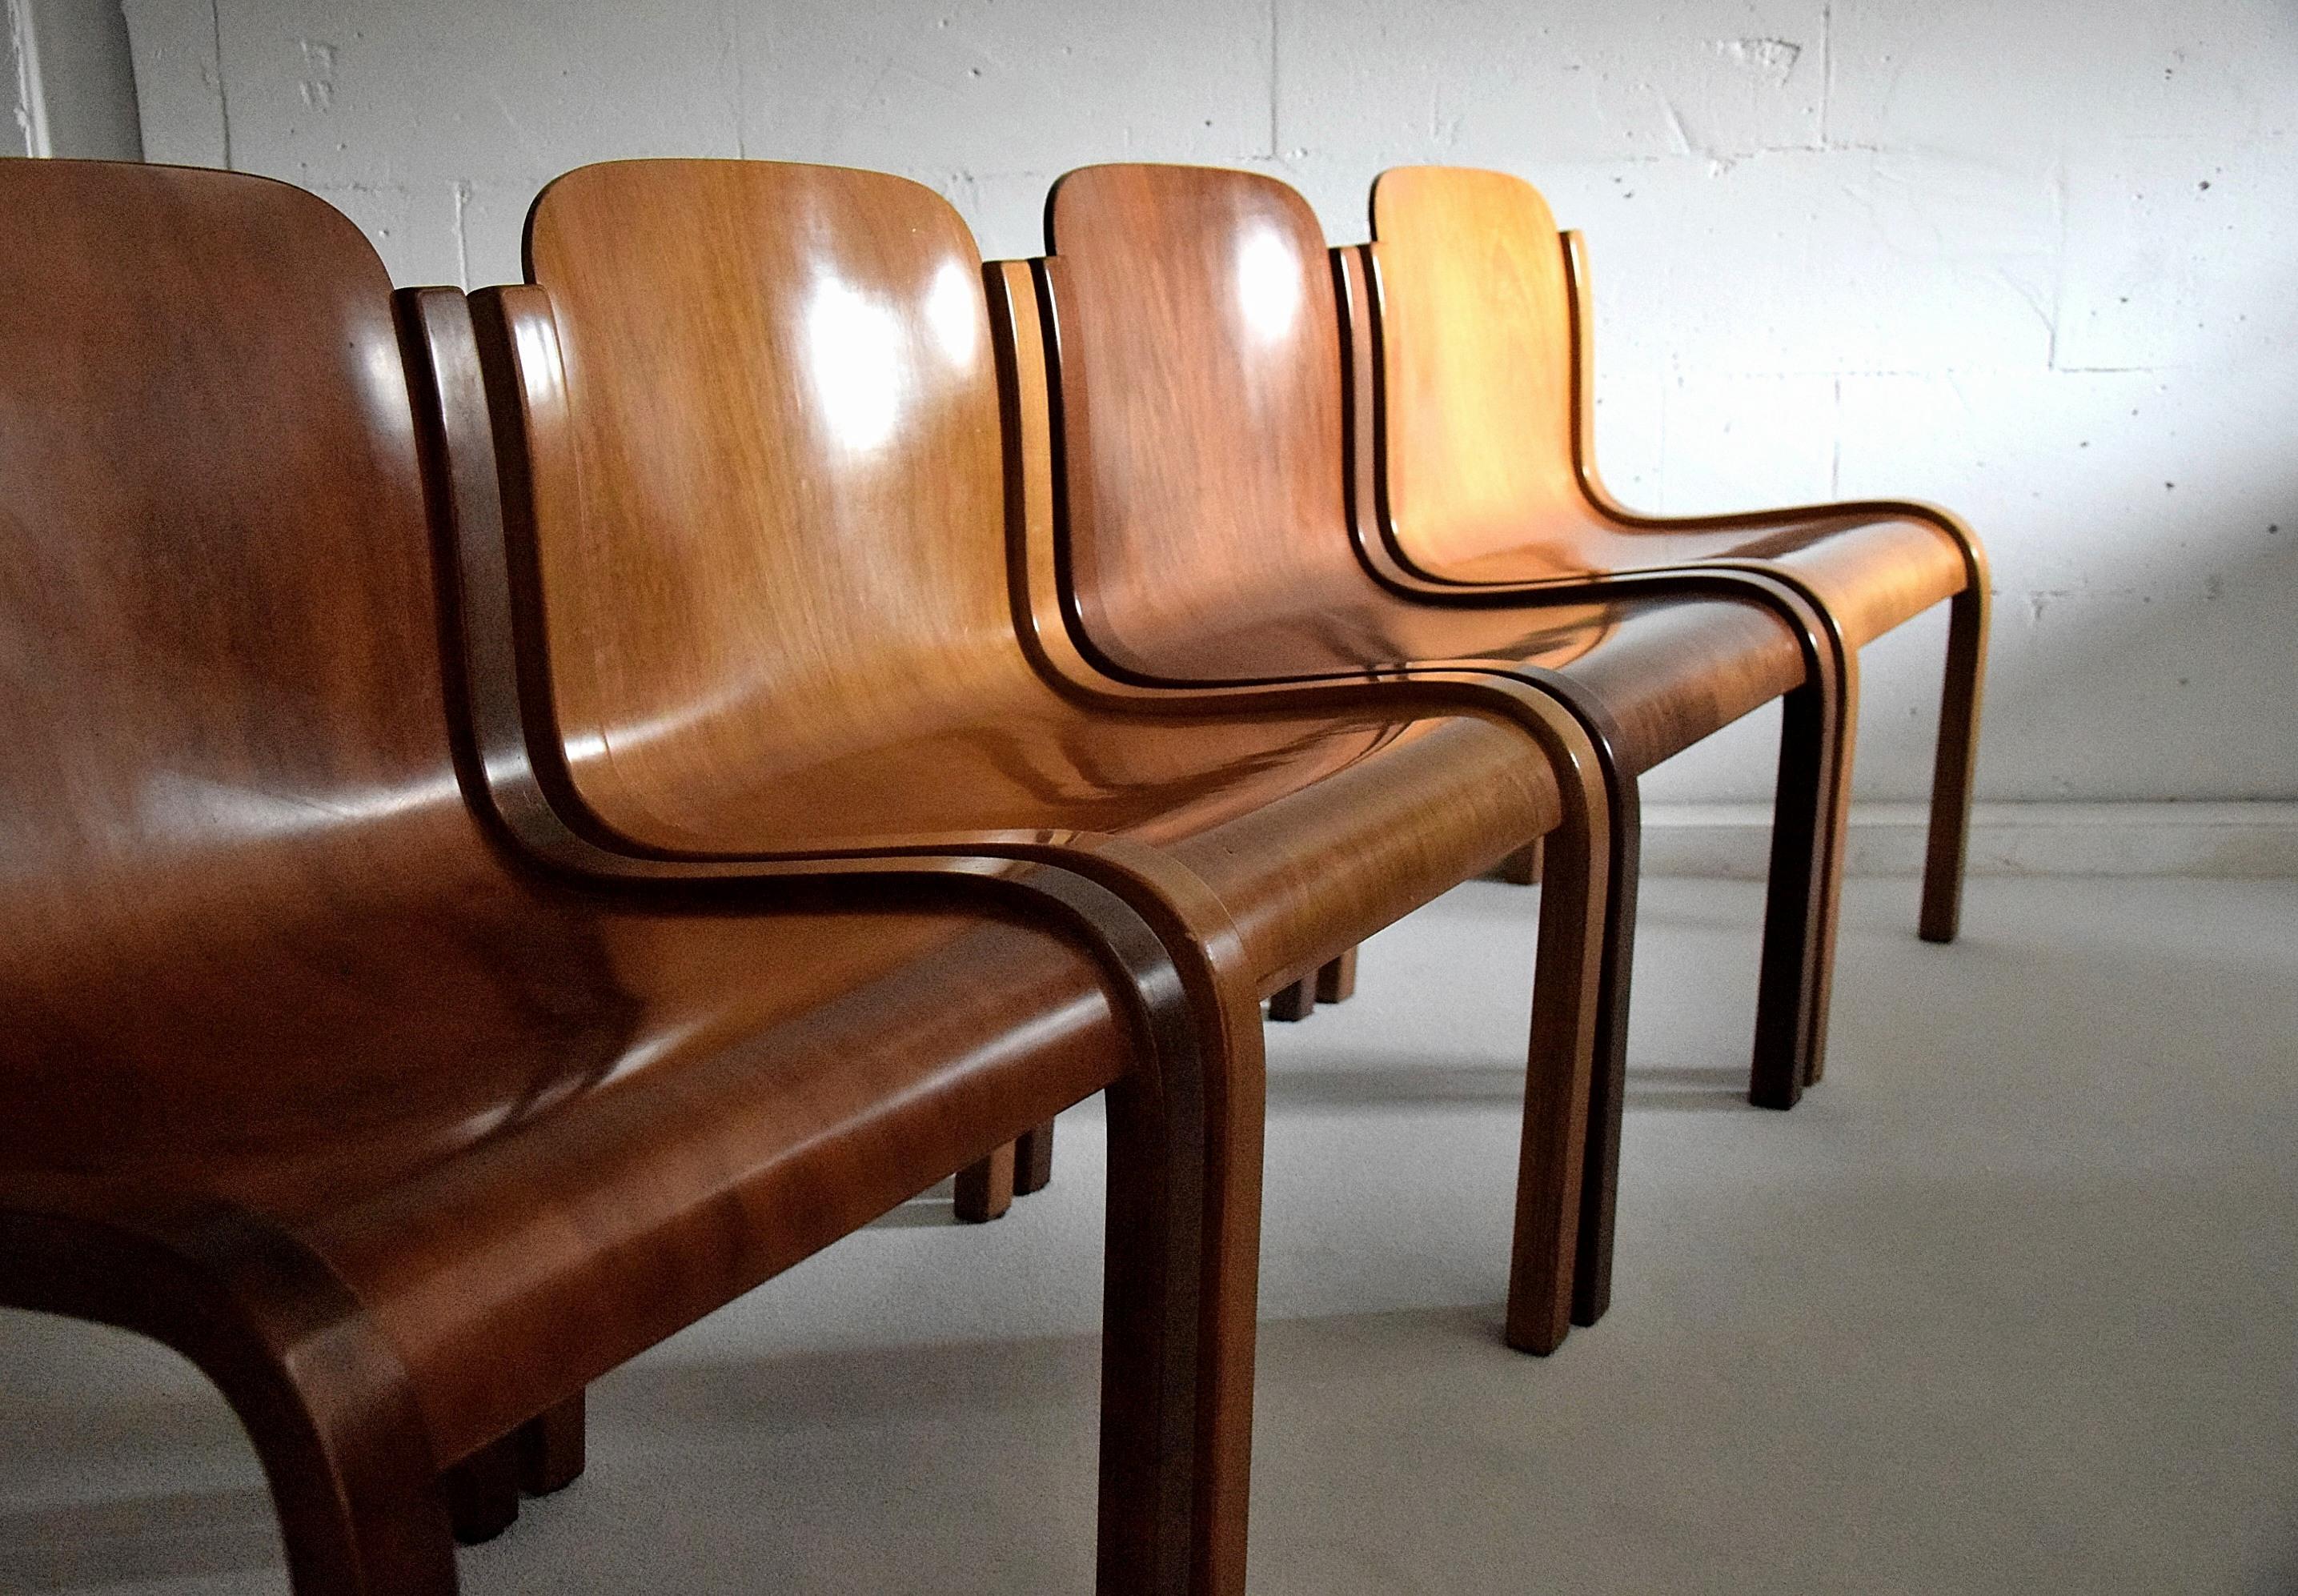 Mid-20th Century Italian Mid-Century Modern Curved Plywood Chairs by Carlo Bartoli